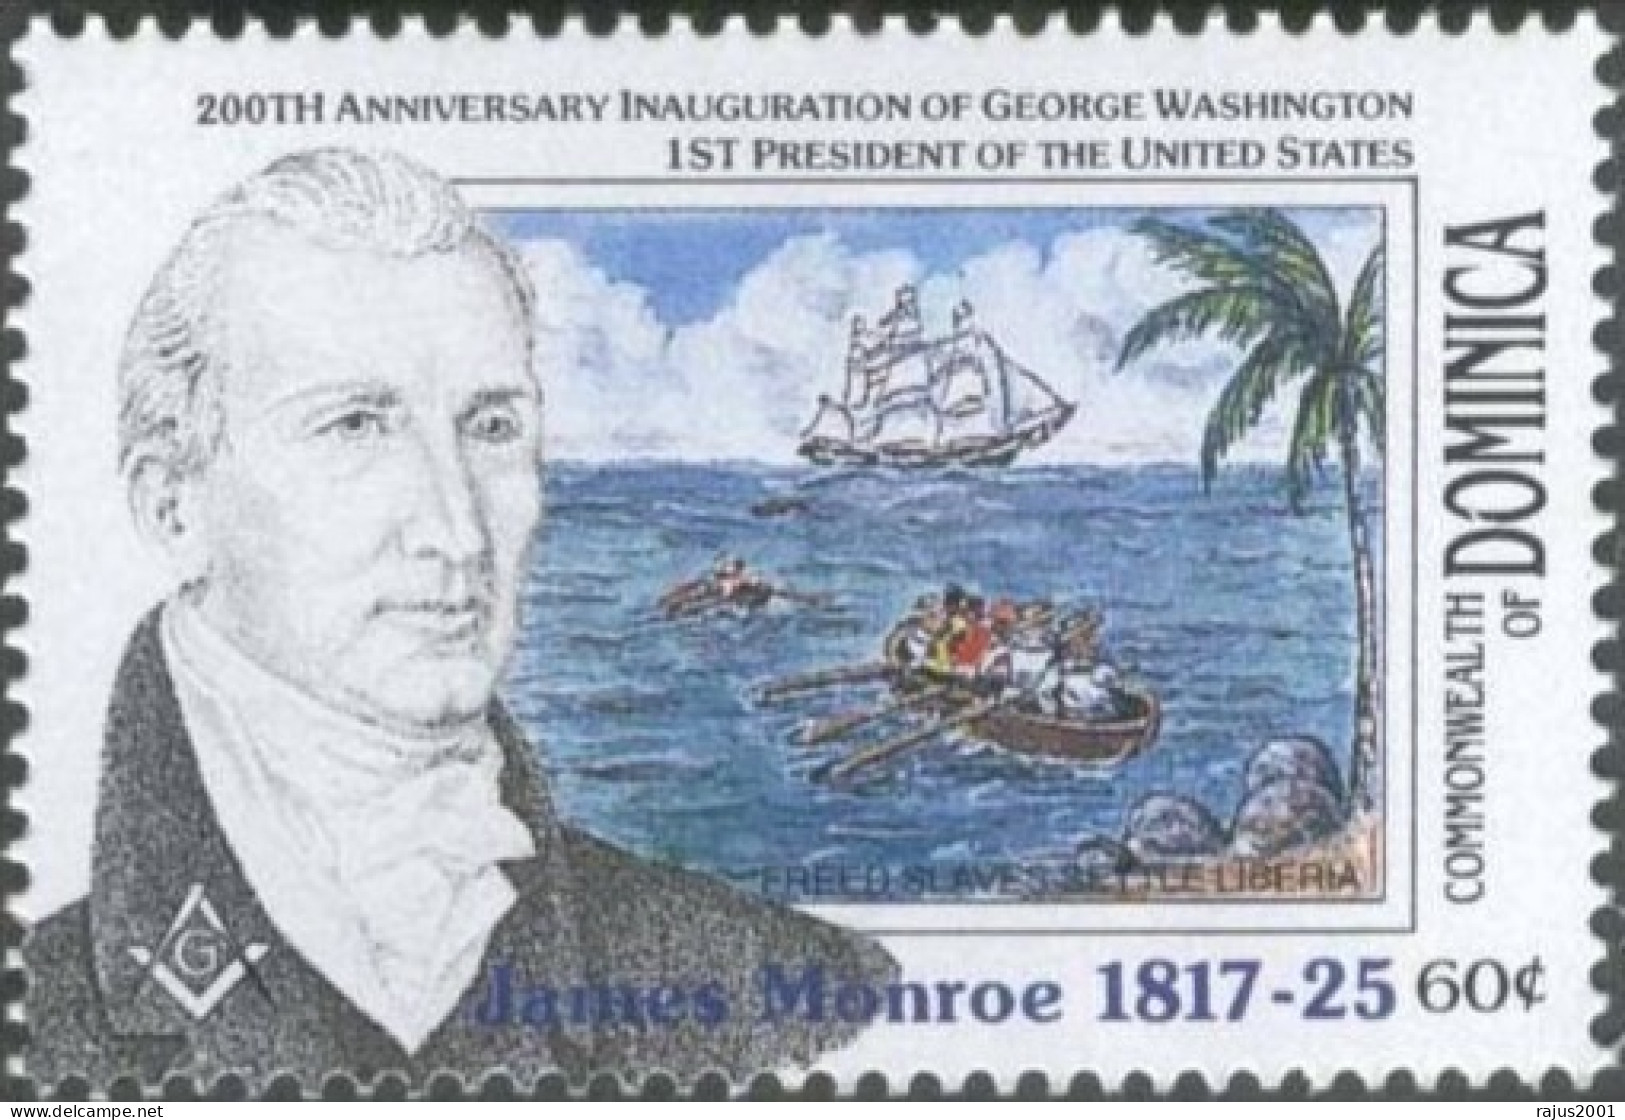 James Monroe, 5th American President, Williamsburg Lodge, Freemasonry, Freed Slaves Settlement Liberia, MNH Dominica - Franc-Maçonnerie